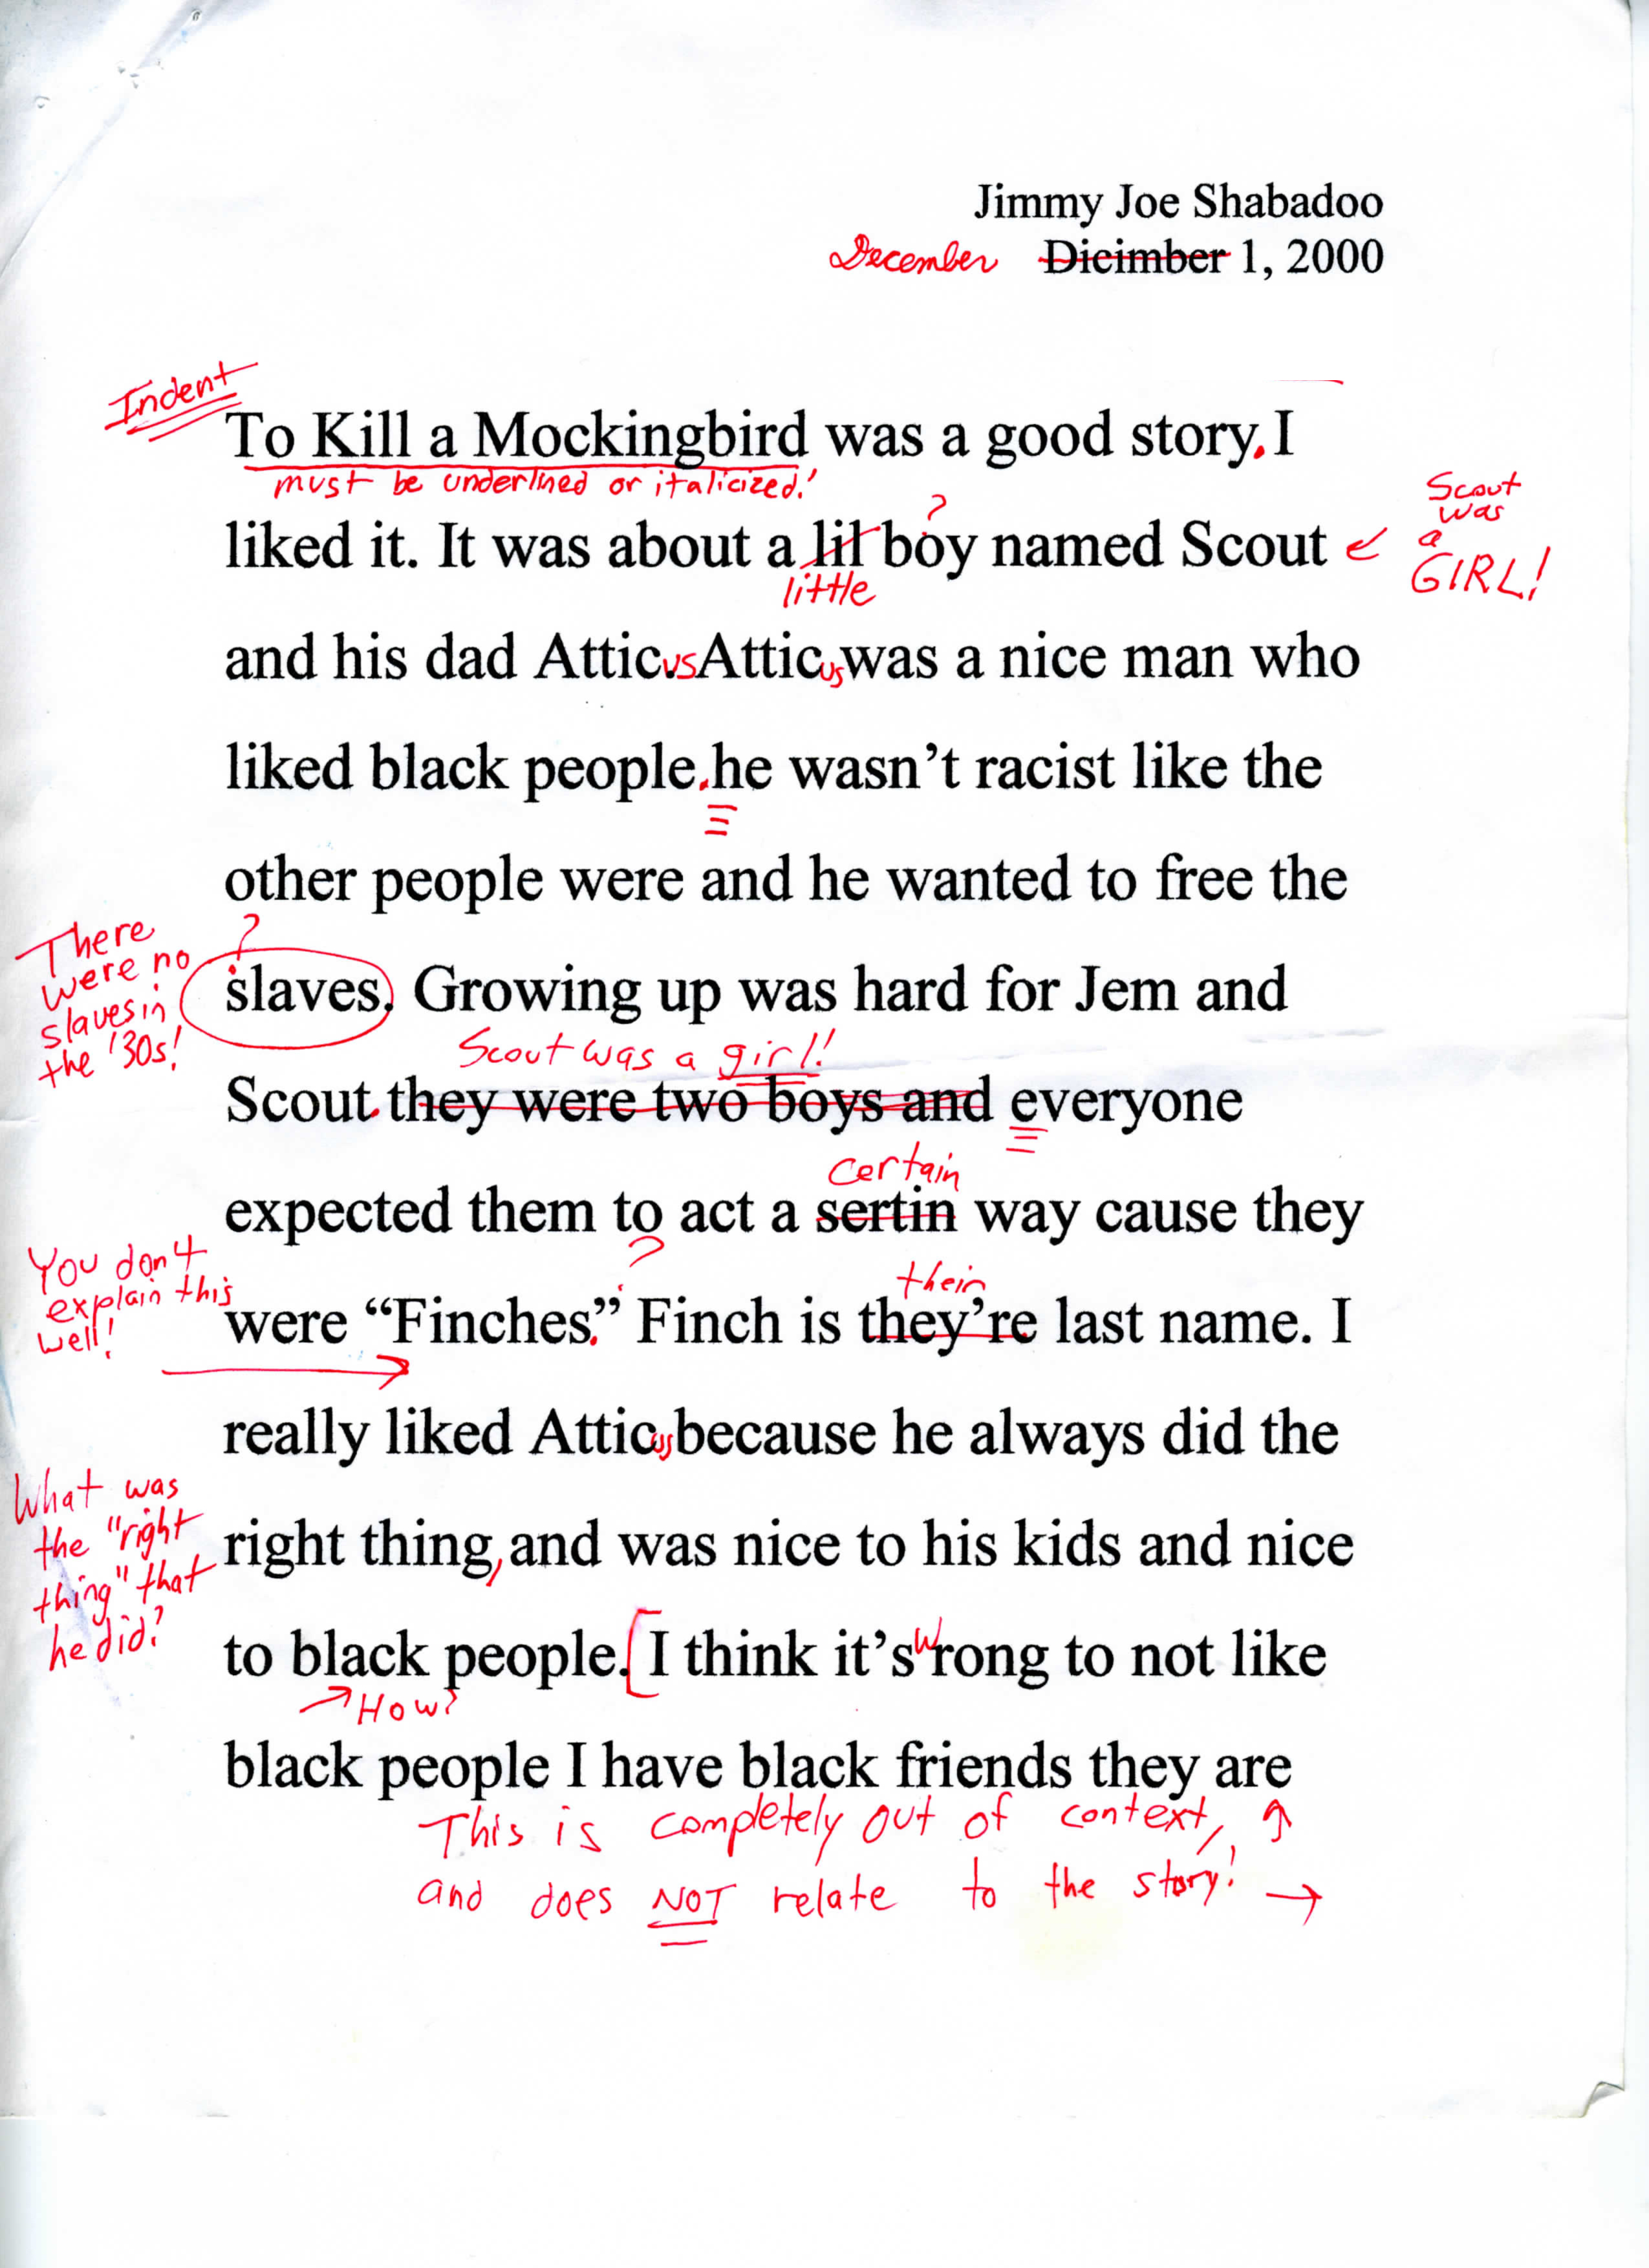 Essay on racism in to kill a mockingbird